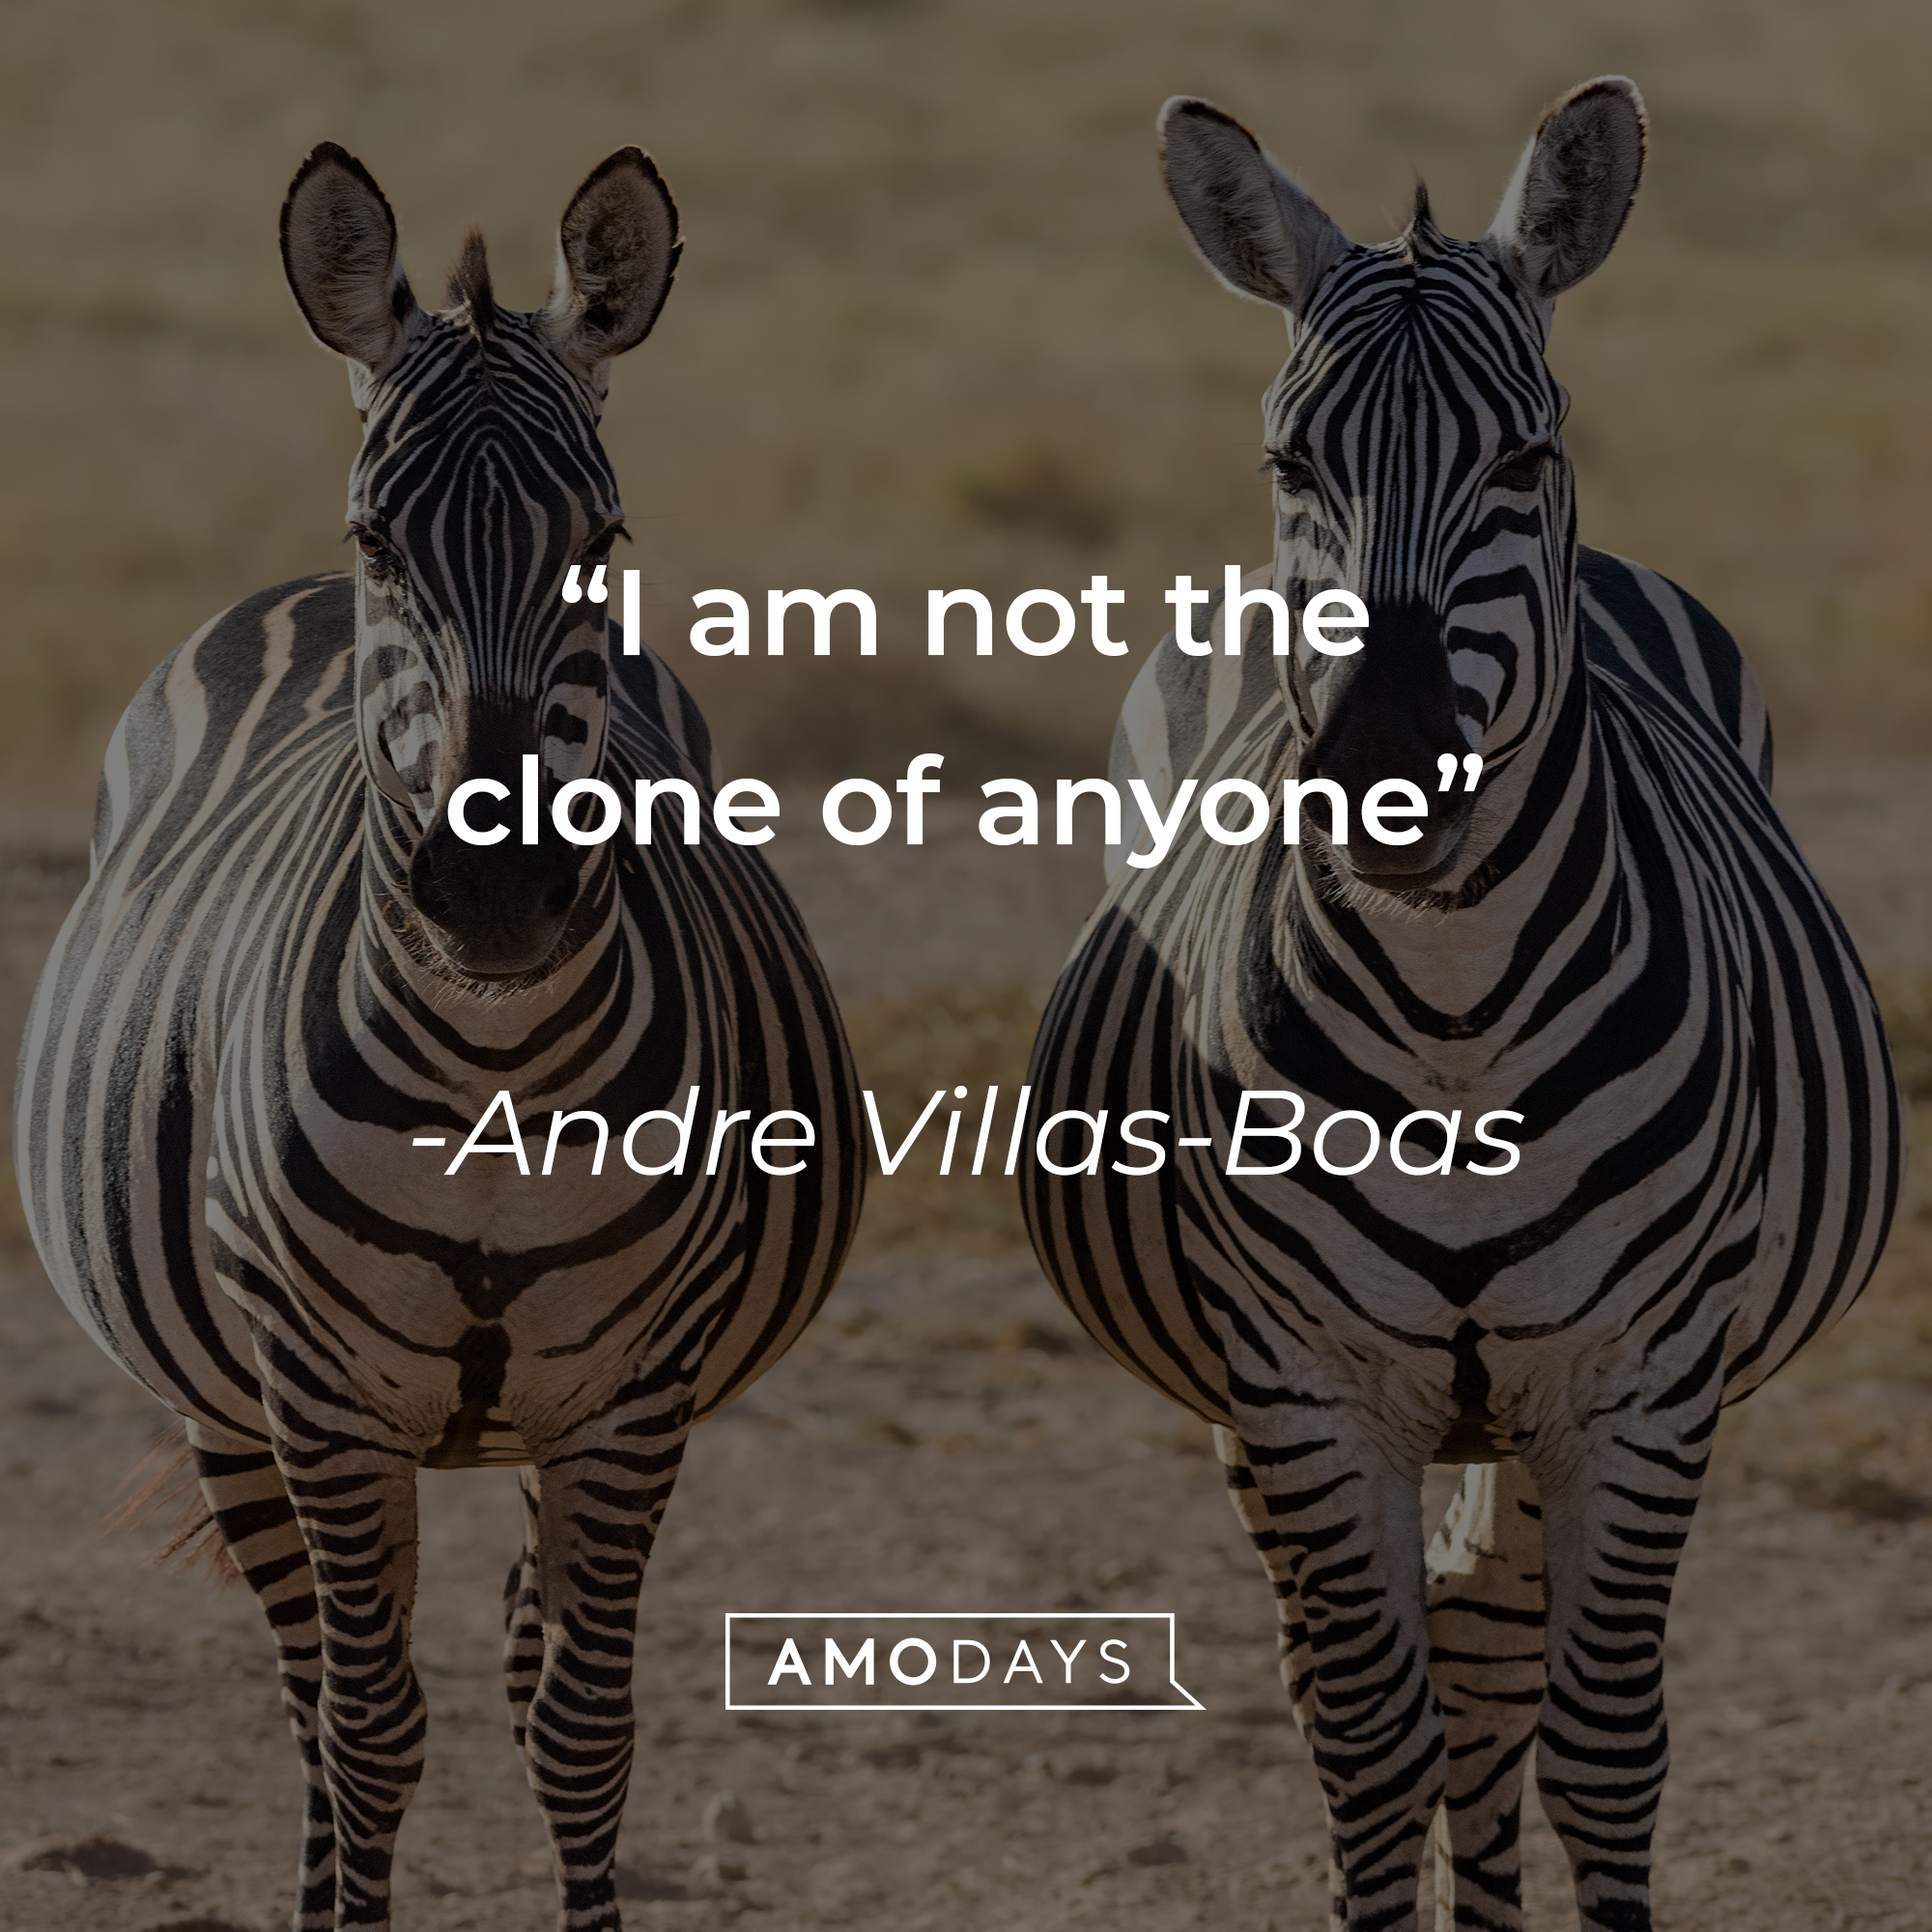 Andre Villas-Boas's quote, "I am not the clone of anyone" | Image: Unsplash.com